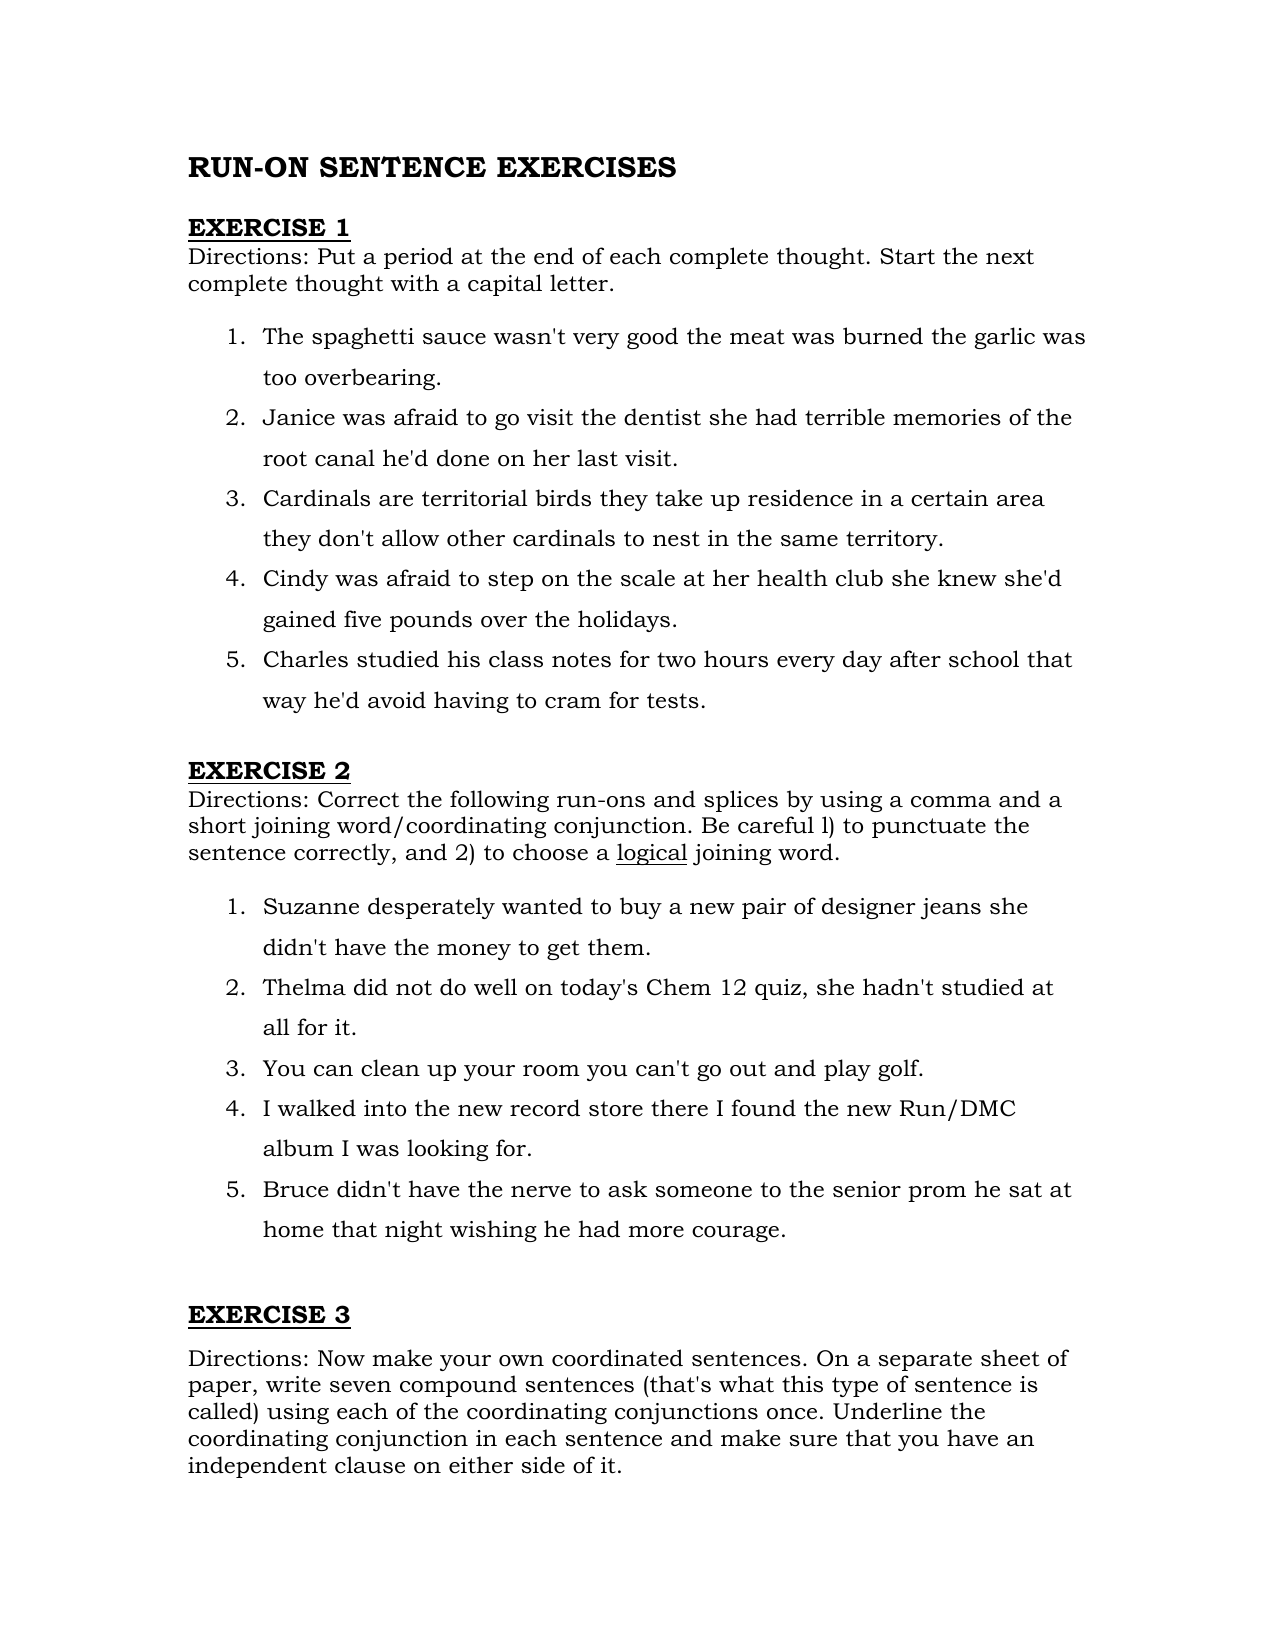 correcting-run-on-sentences-worksheet-7th-grade-sentenceworksheets